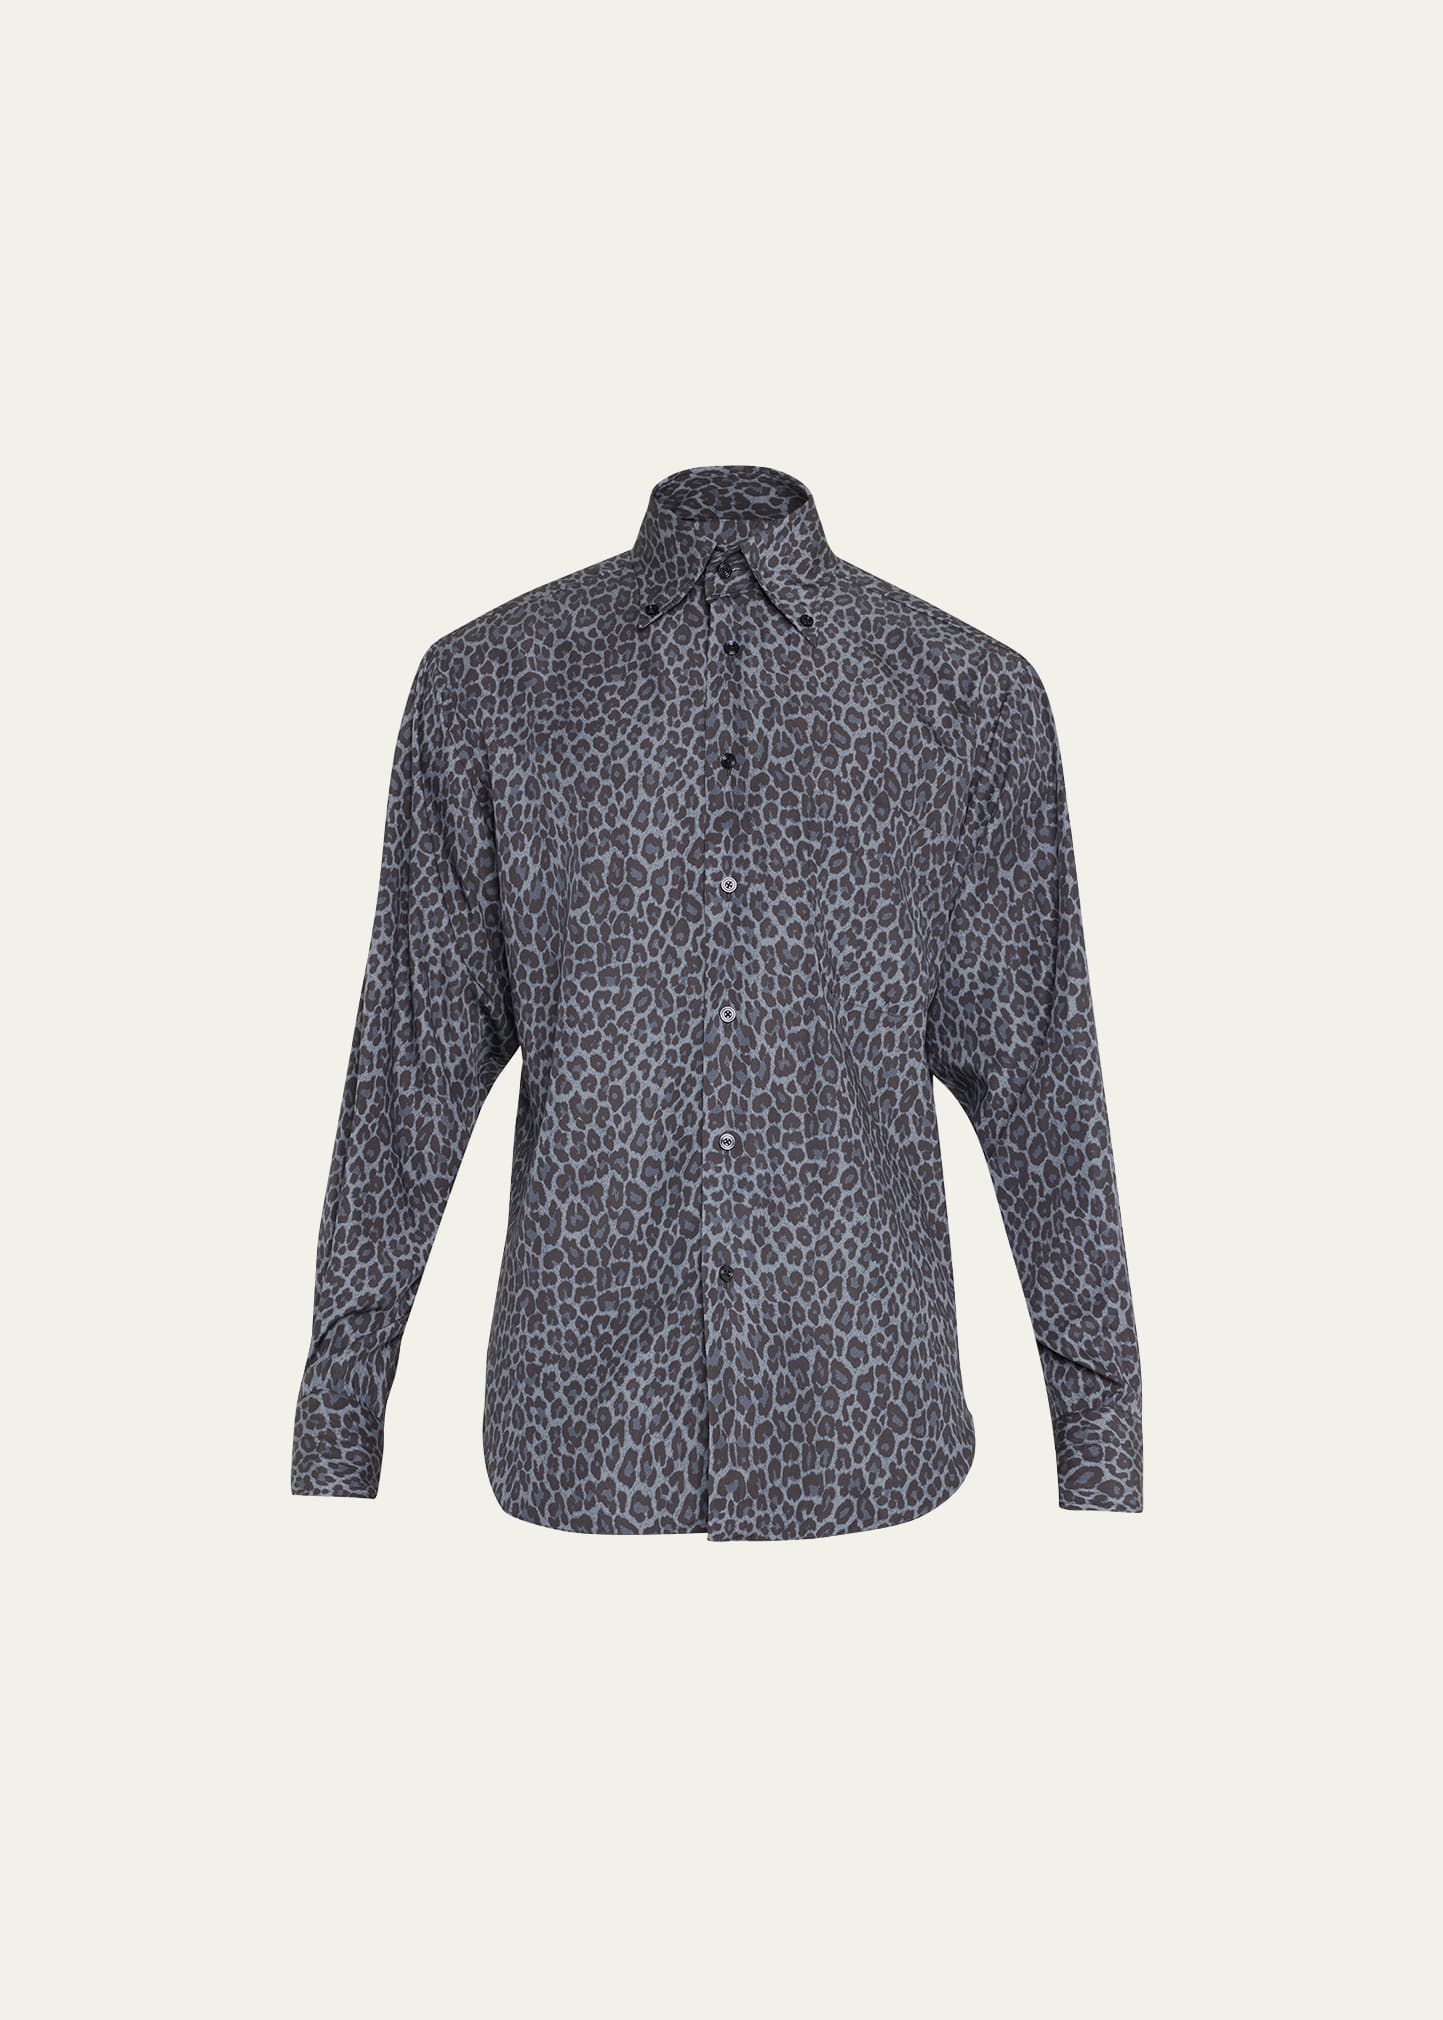 TOM FORD Men's Camouflage-Print Dress Shirt - Bergdorf Goodman